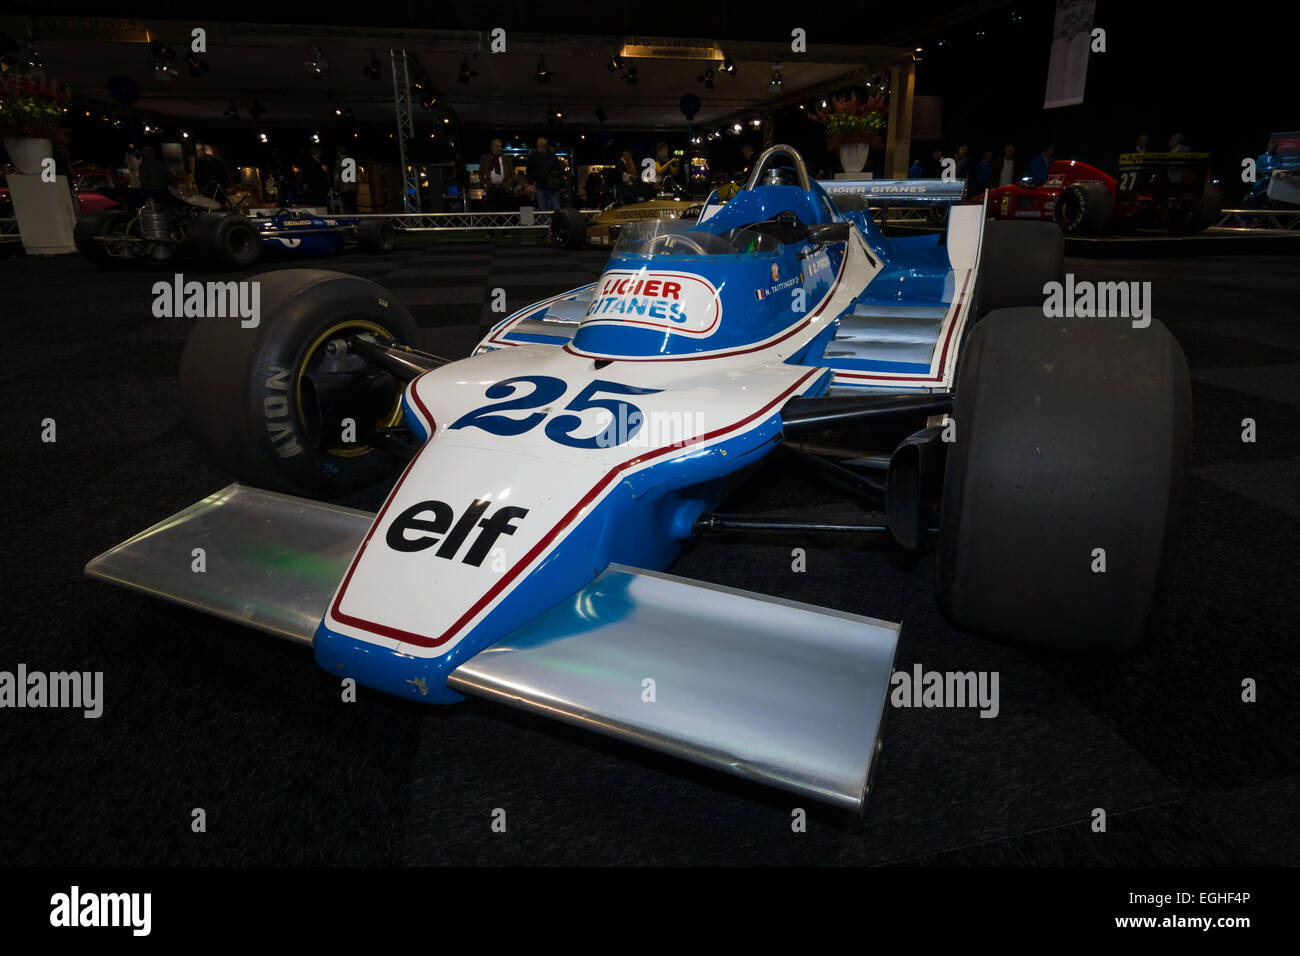 Formula One car Ligier JS11, designed by Gerard Ducarouge, 1980 Stock Photo